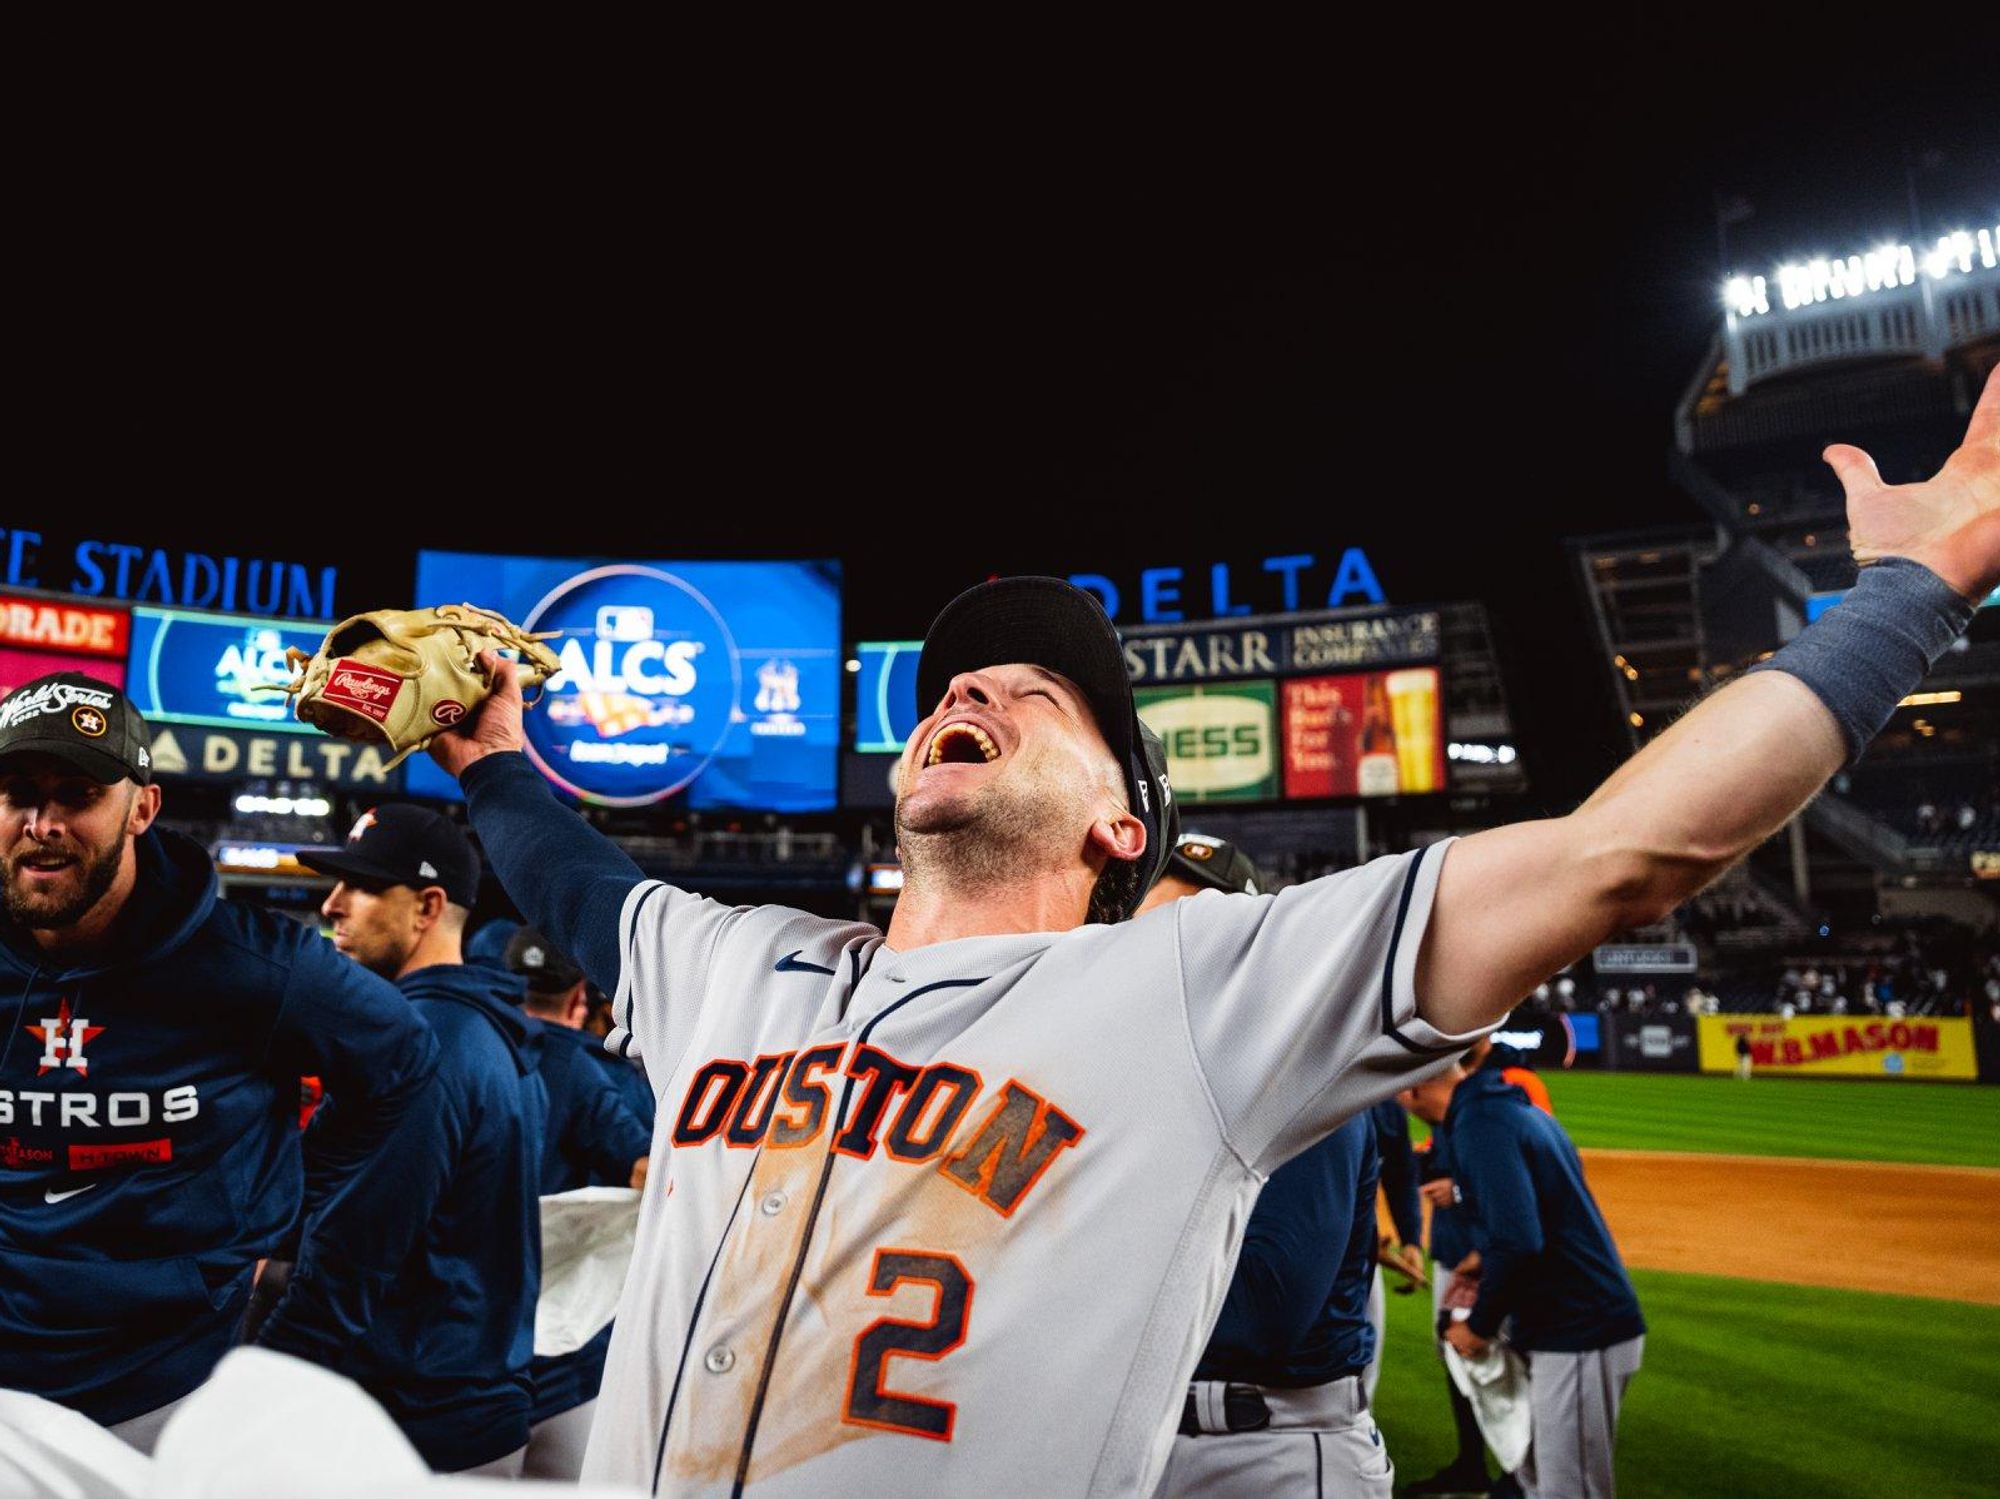 NYC-born Ken Hoffman reveals striking similarities between the Yankees and  those 'Damn Astros' - CultureMap Houston